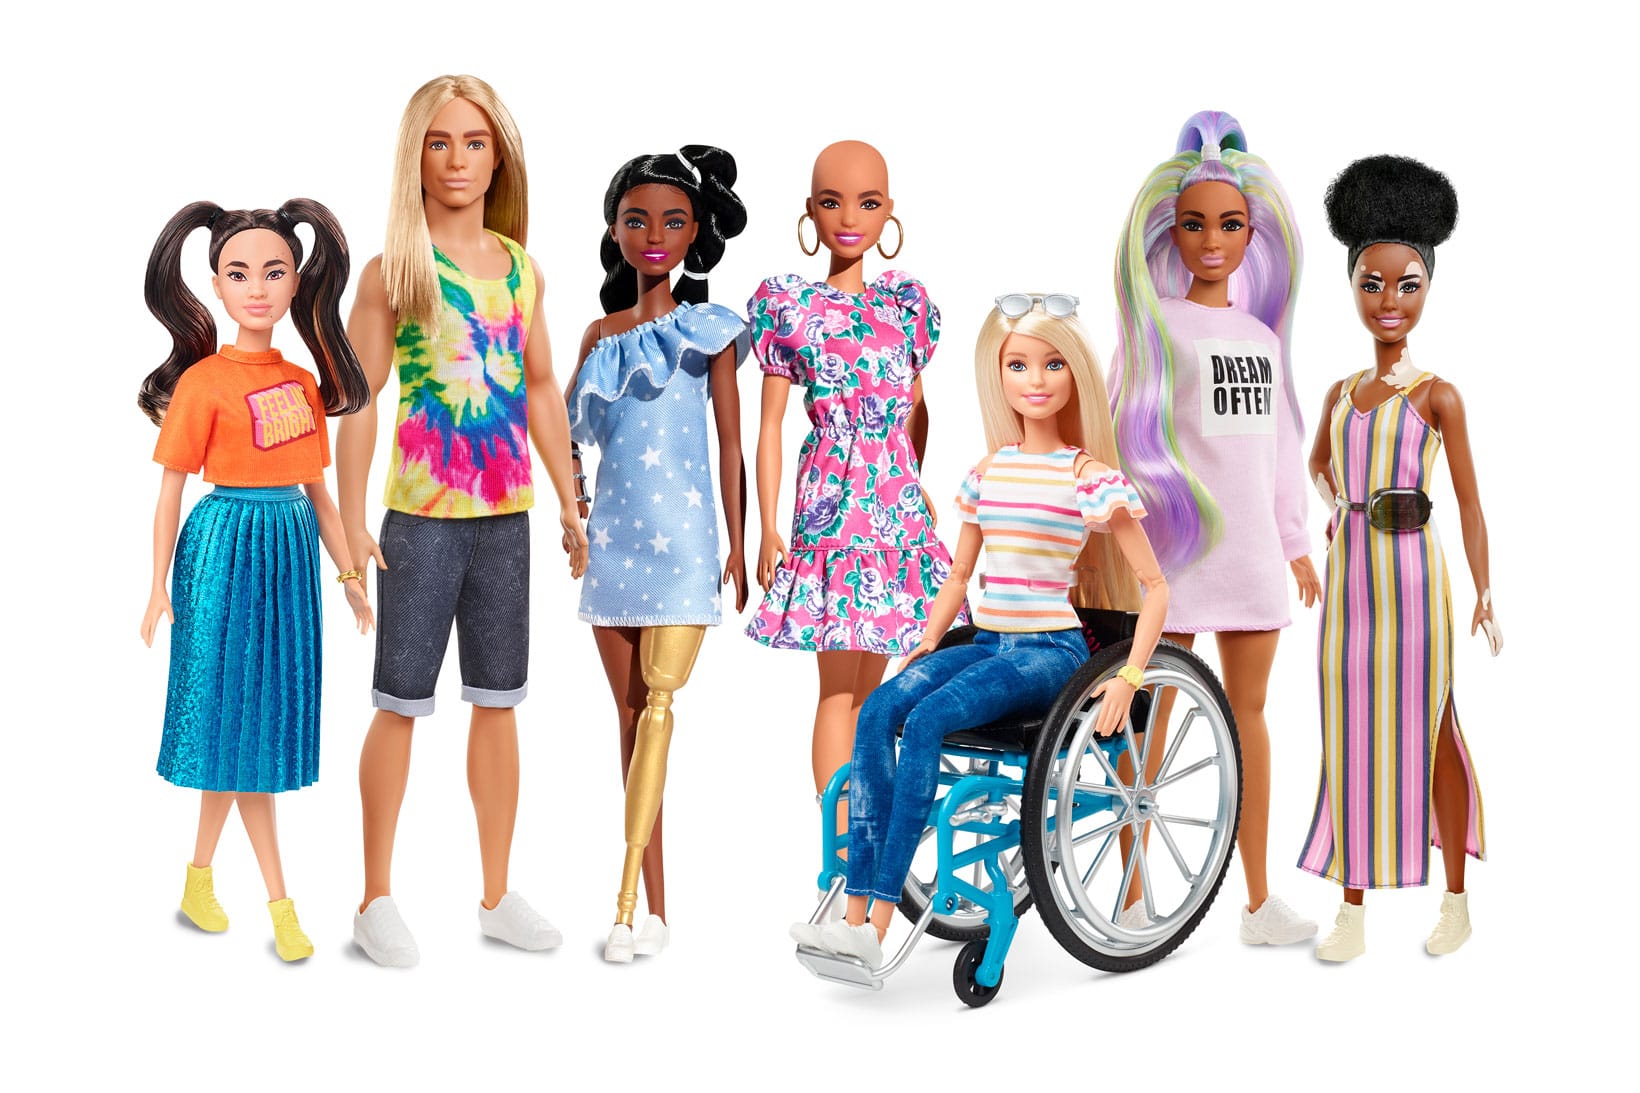 barbie fashionistas plus size